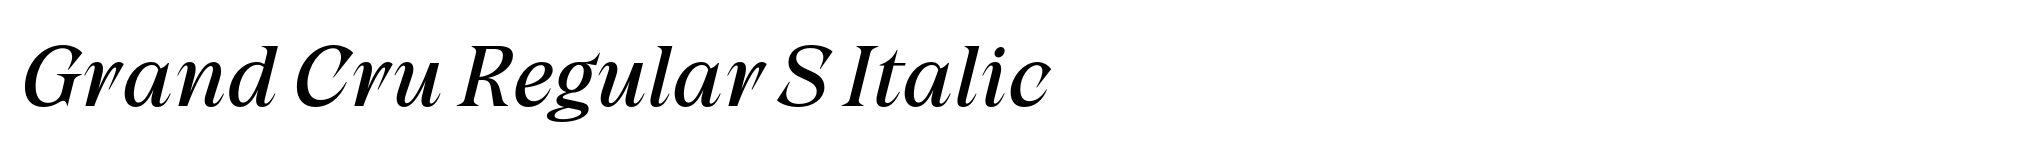 Grand Cru Regular S Italic image